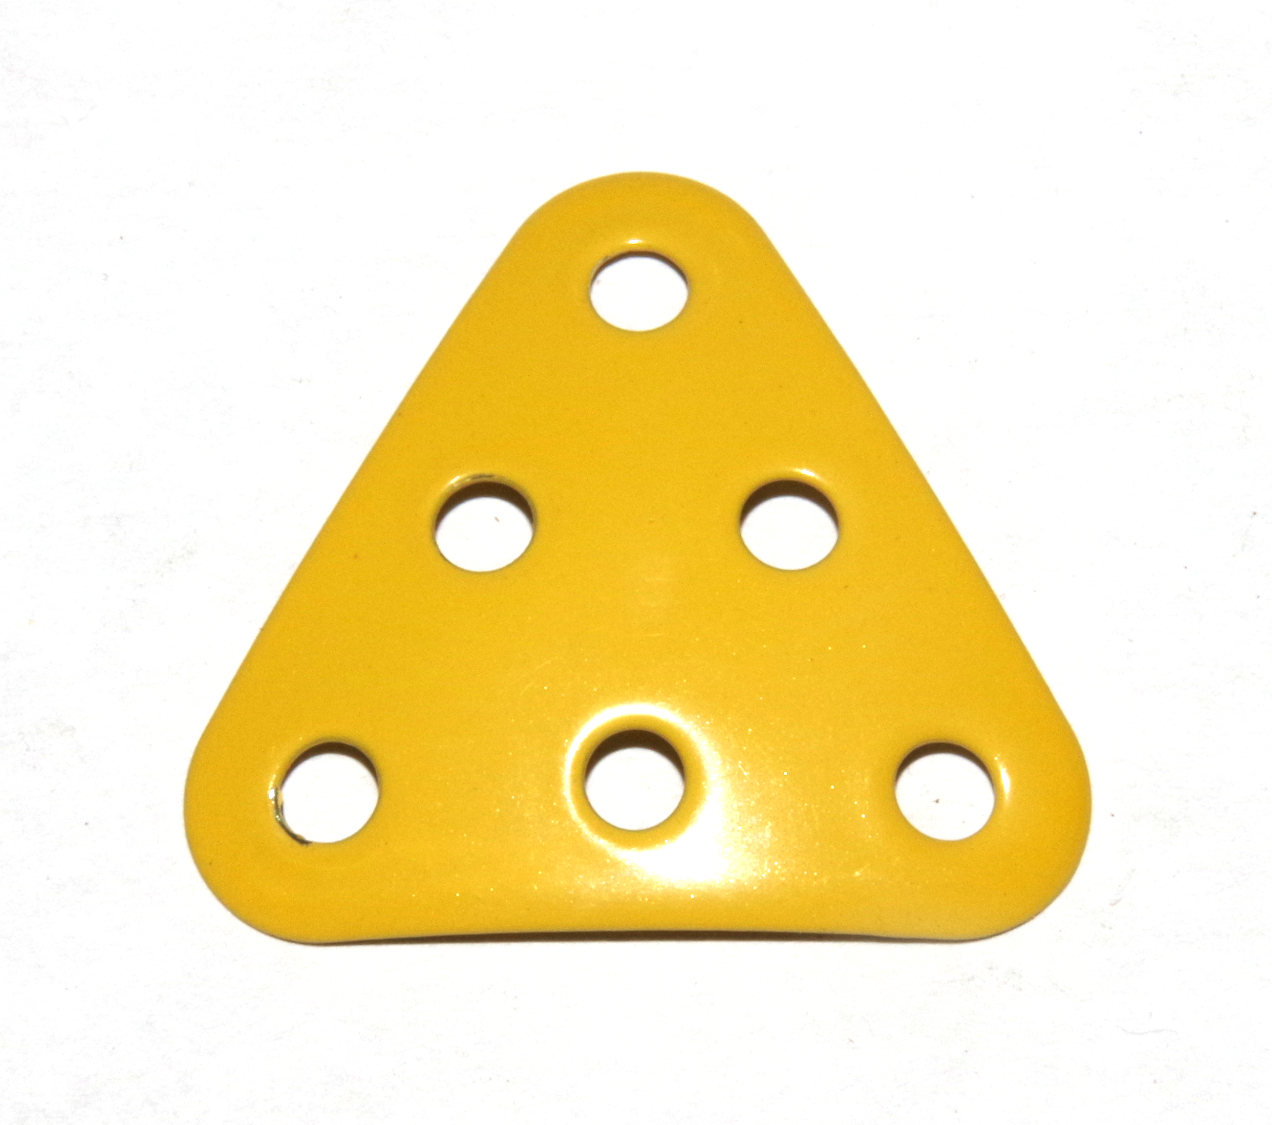 B484 Triangular Plate 3x3x3 Dished Yellow Original